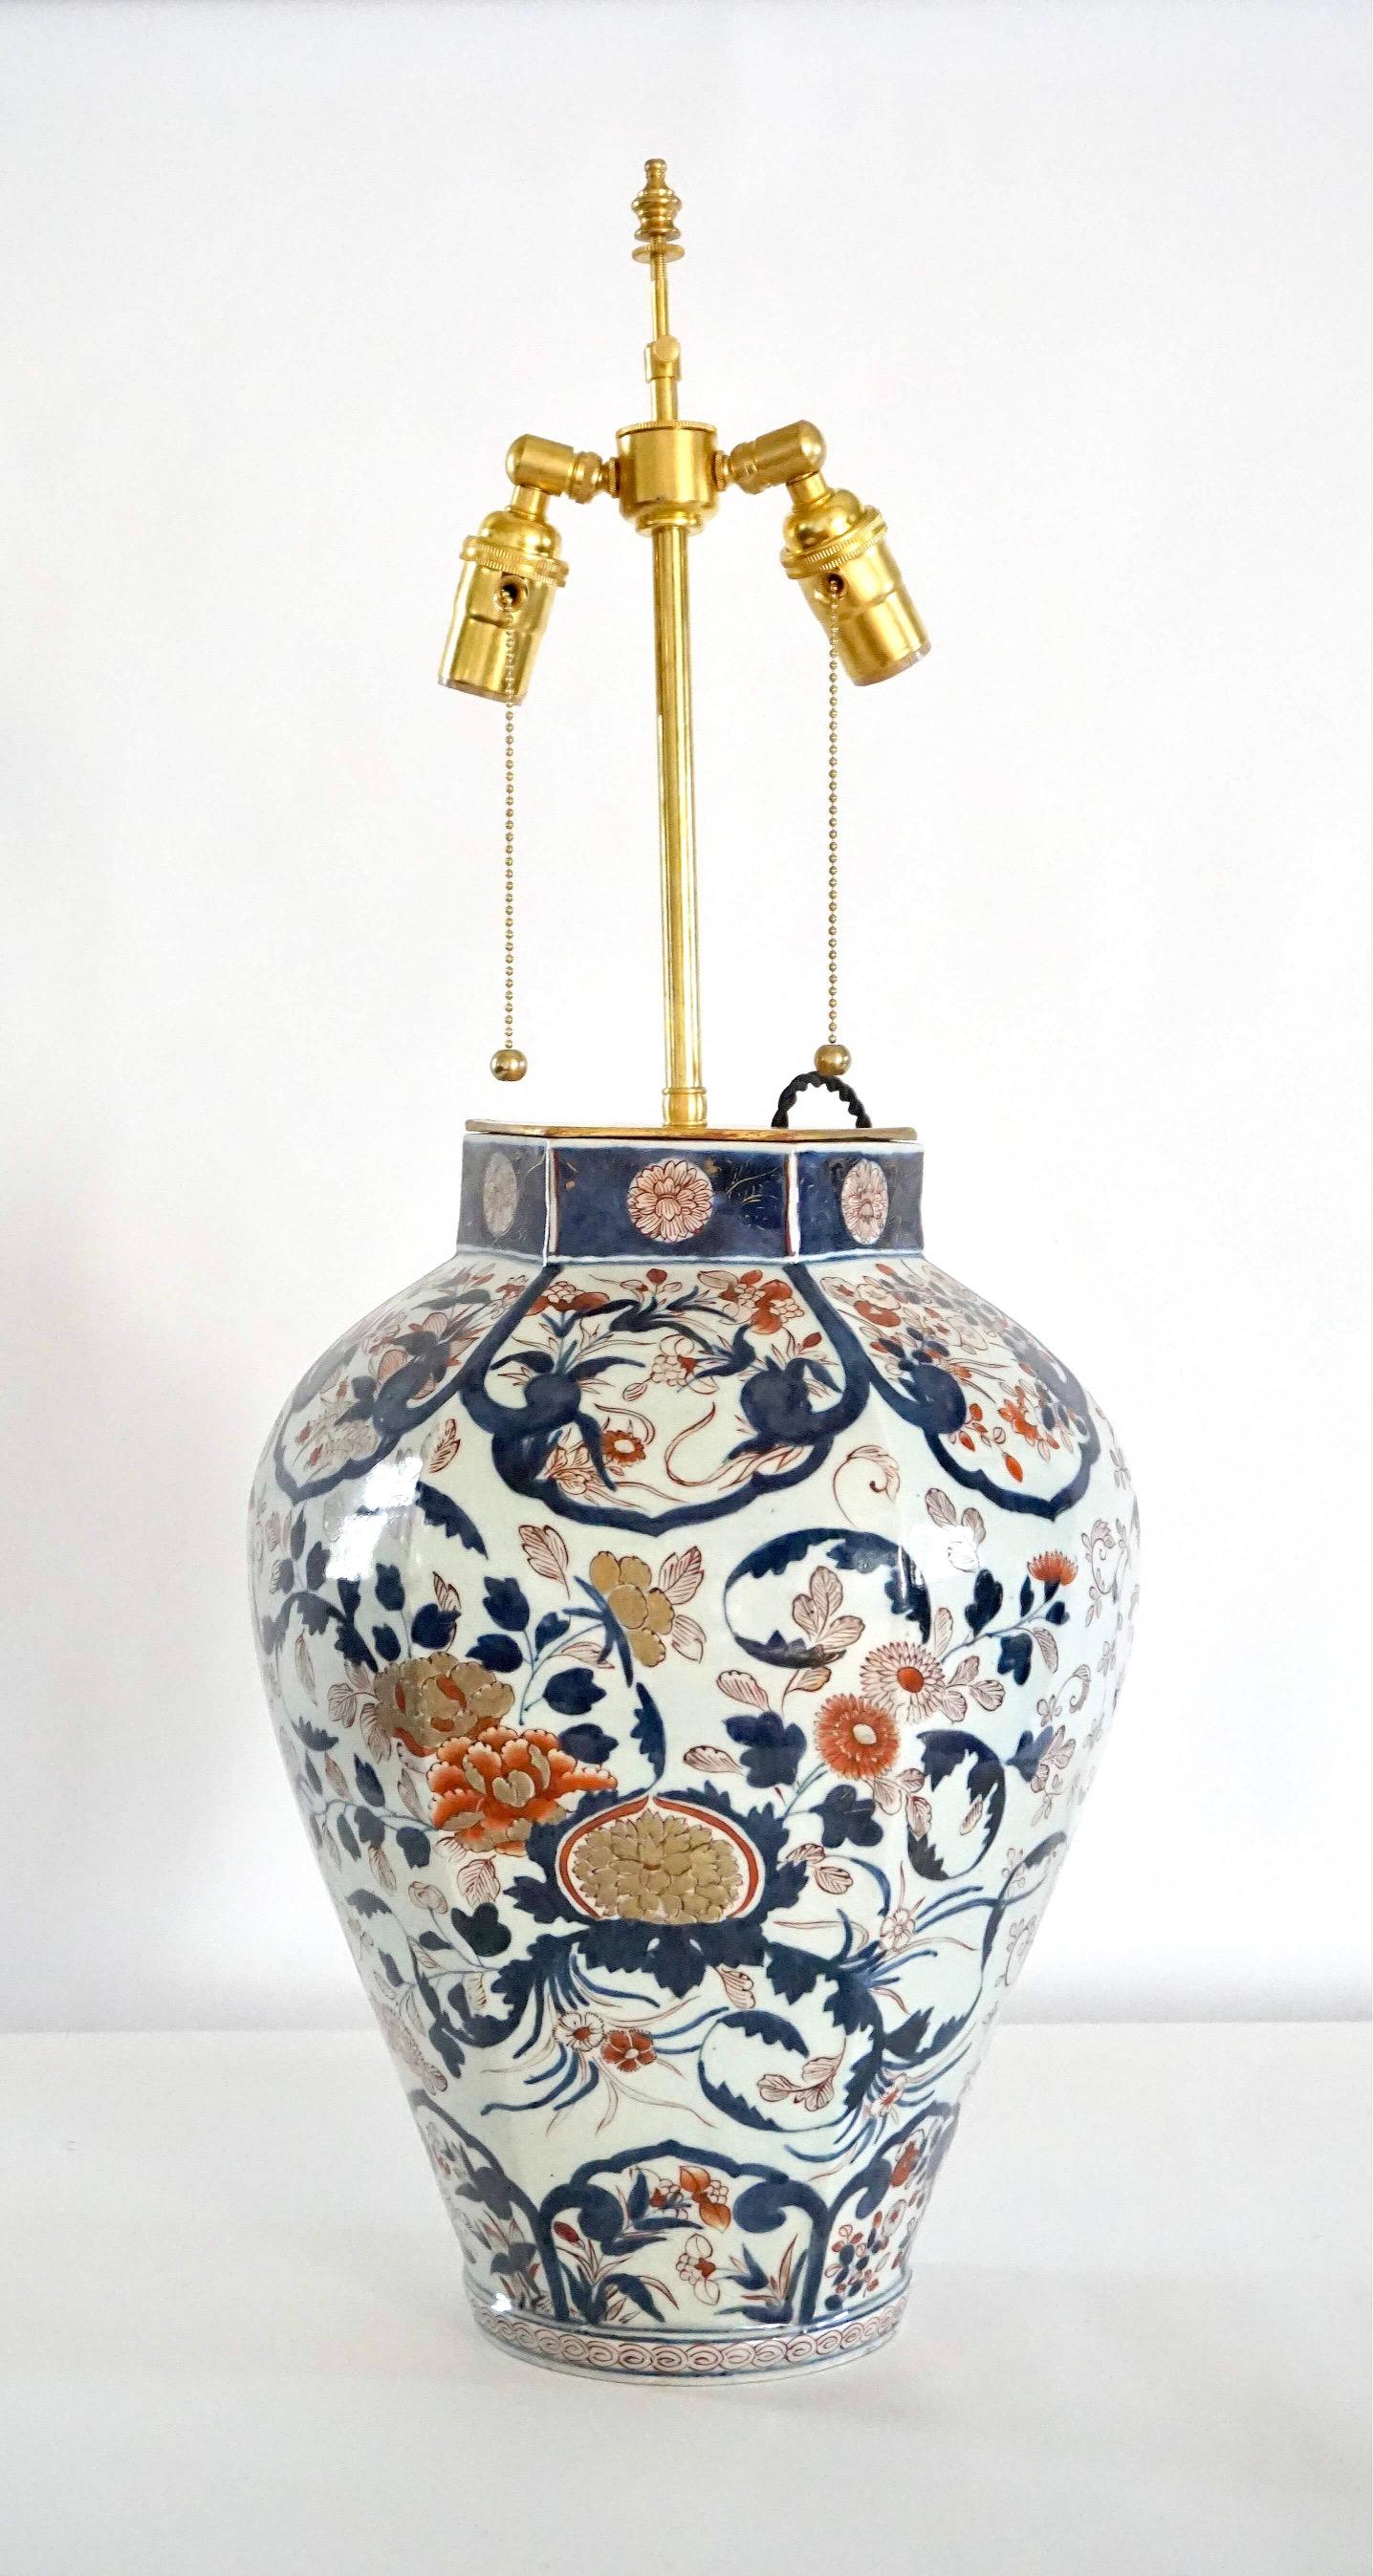 Giltwood Japanese Edo Period Imari Porcelain Vase and Table Lamp, circa 1700